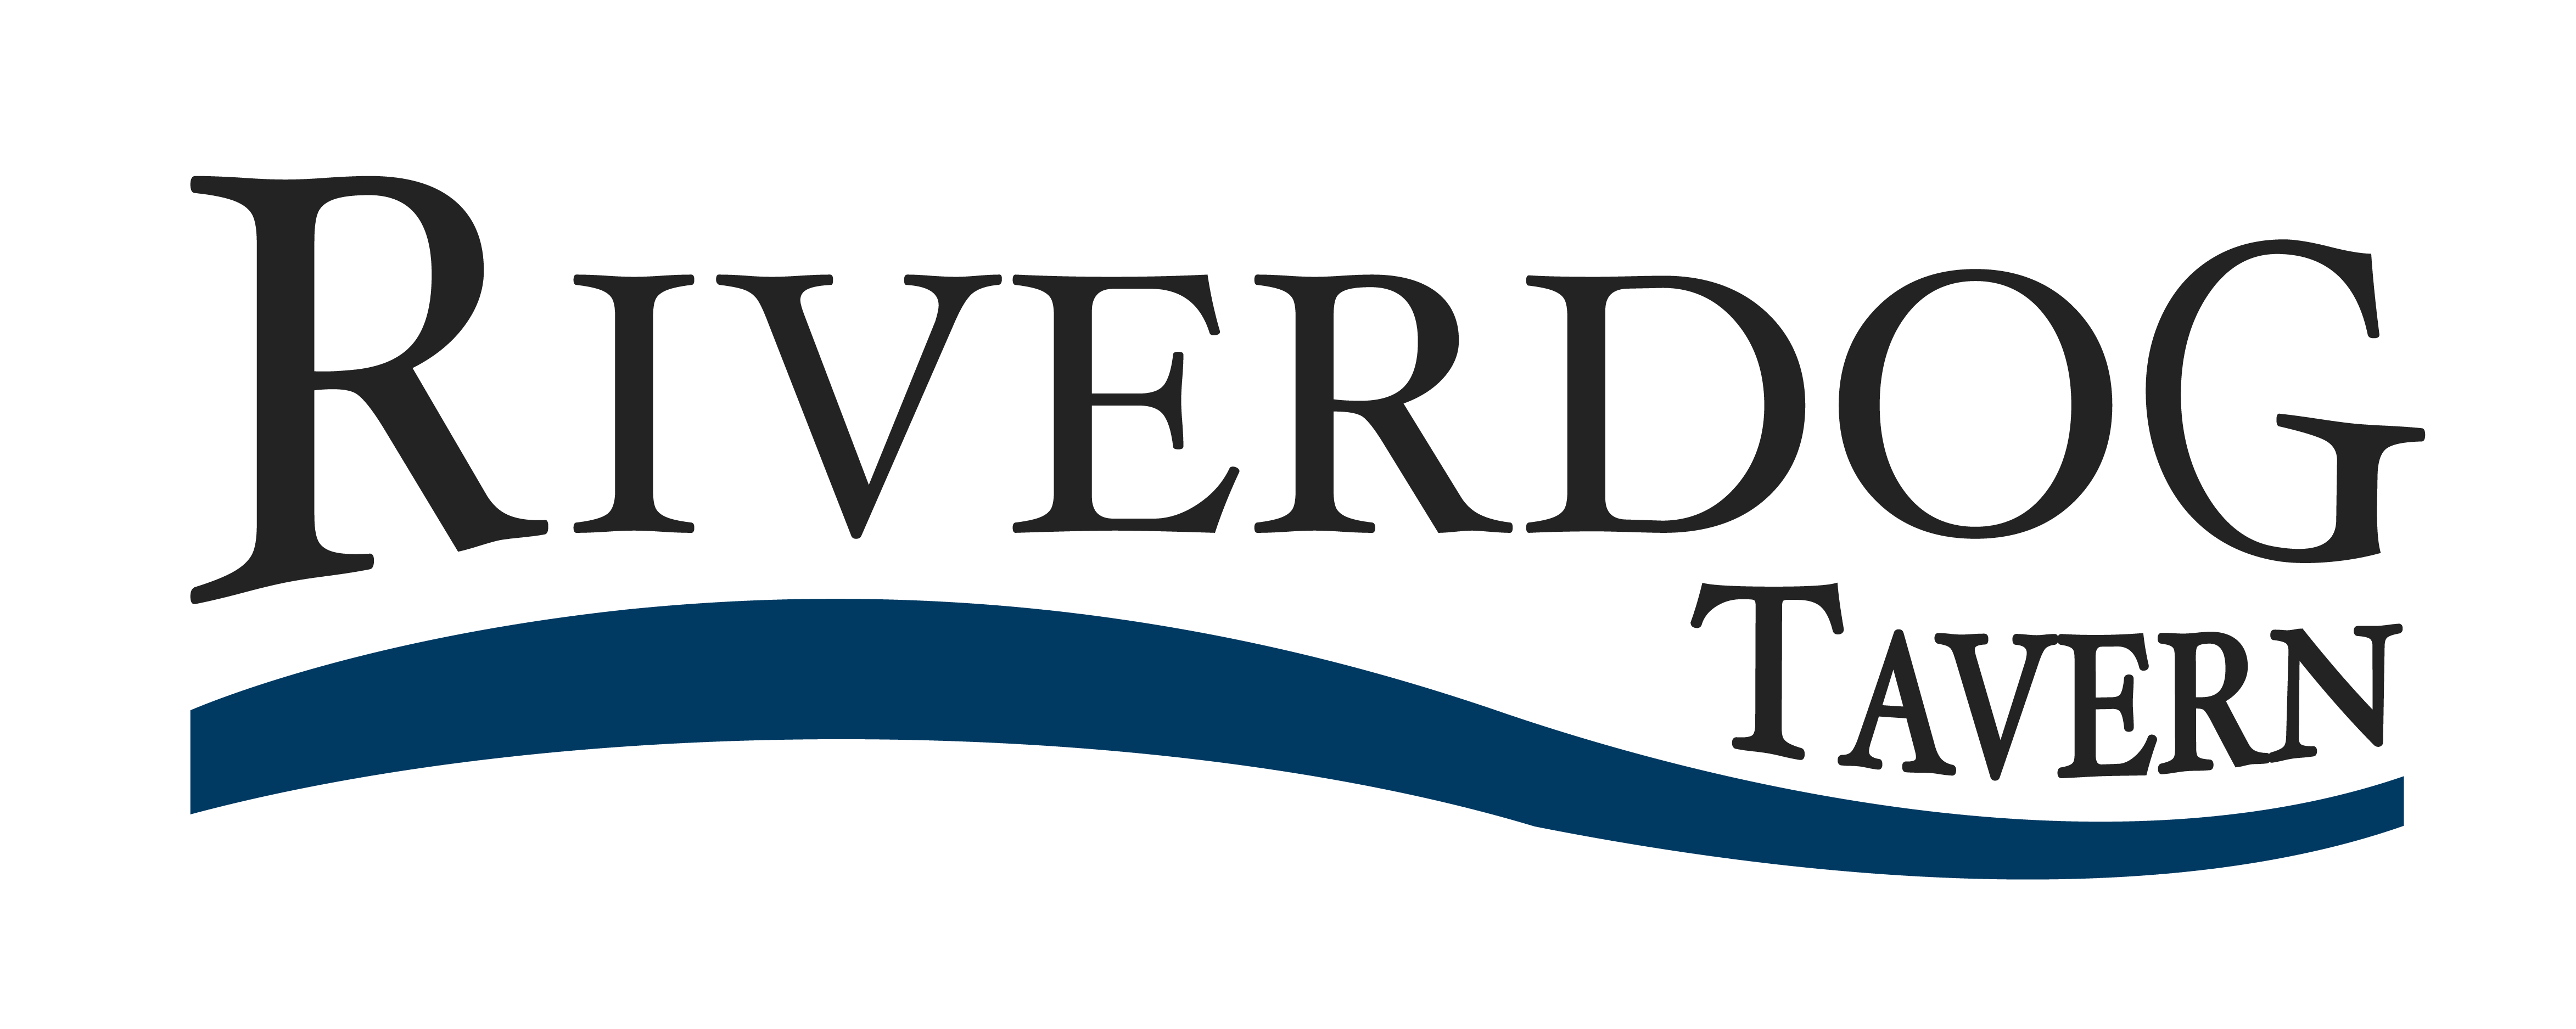 Riverdog Tavern_Logo_Tan_ Blue